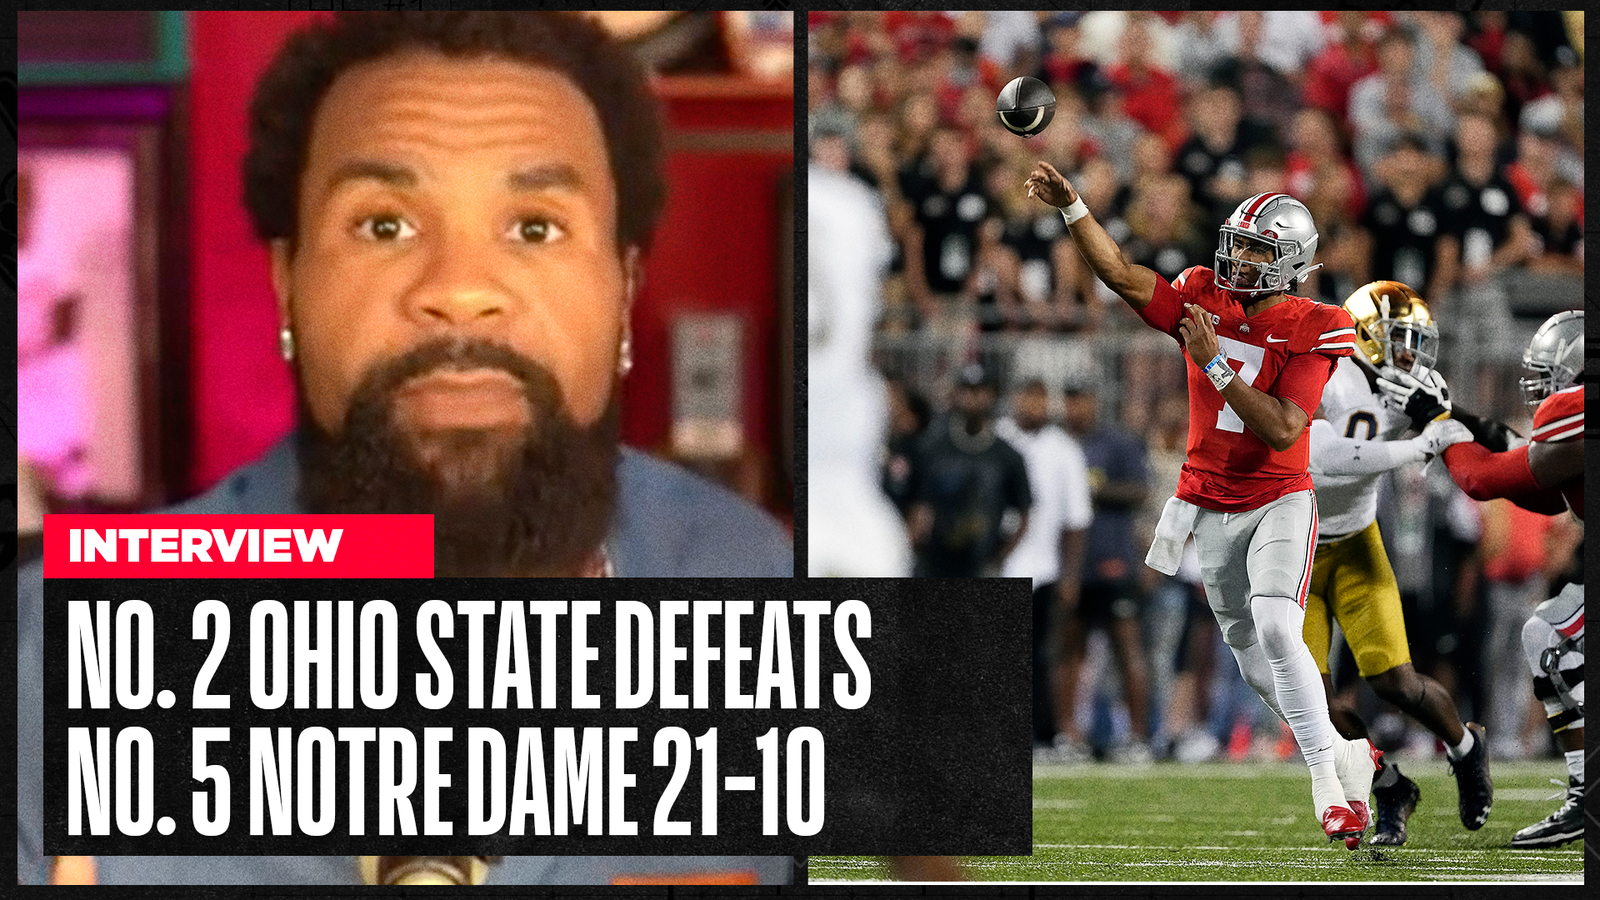 No. 2 Ohio State outlasts No. 5 Notre Dame